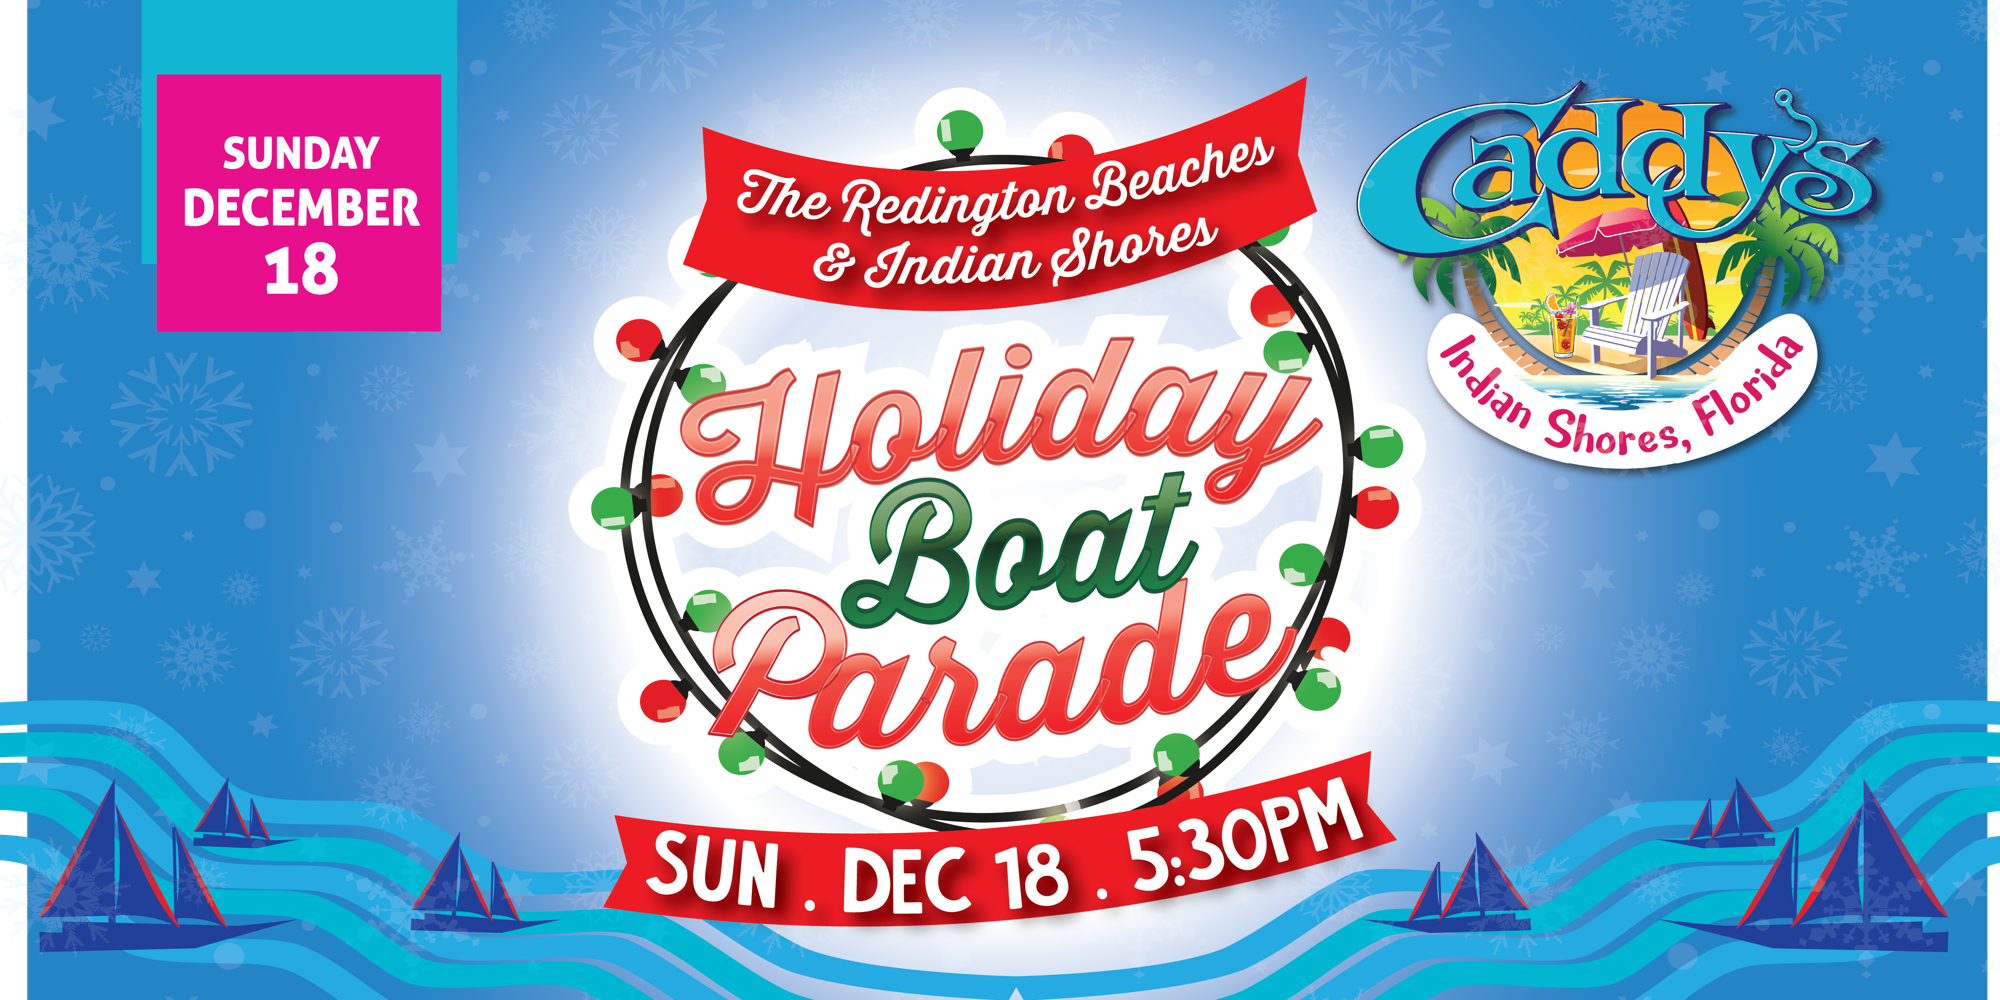 Holiday Boat Parade! promotional image